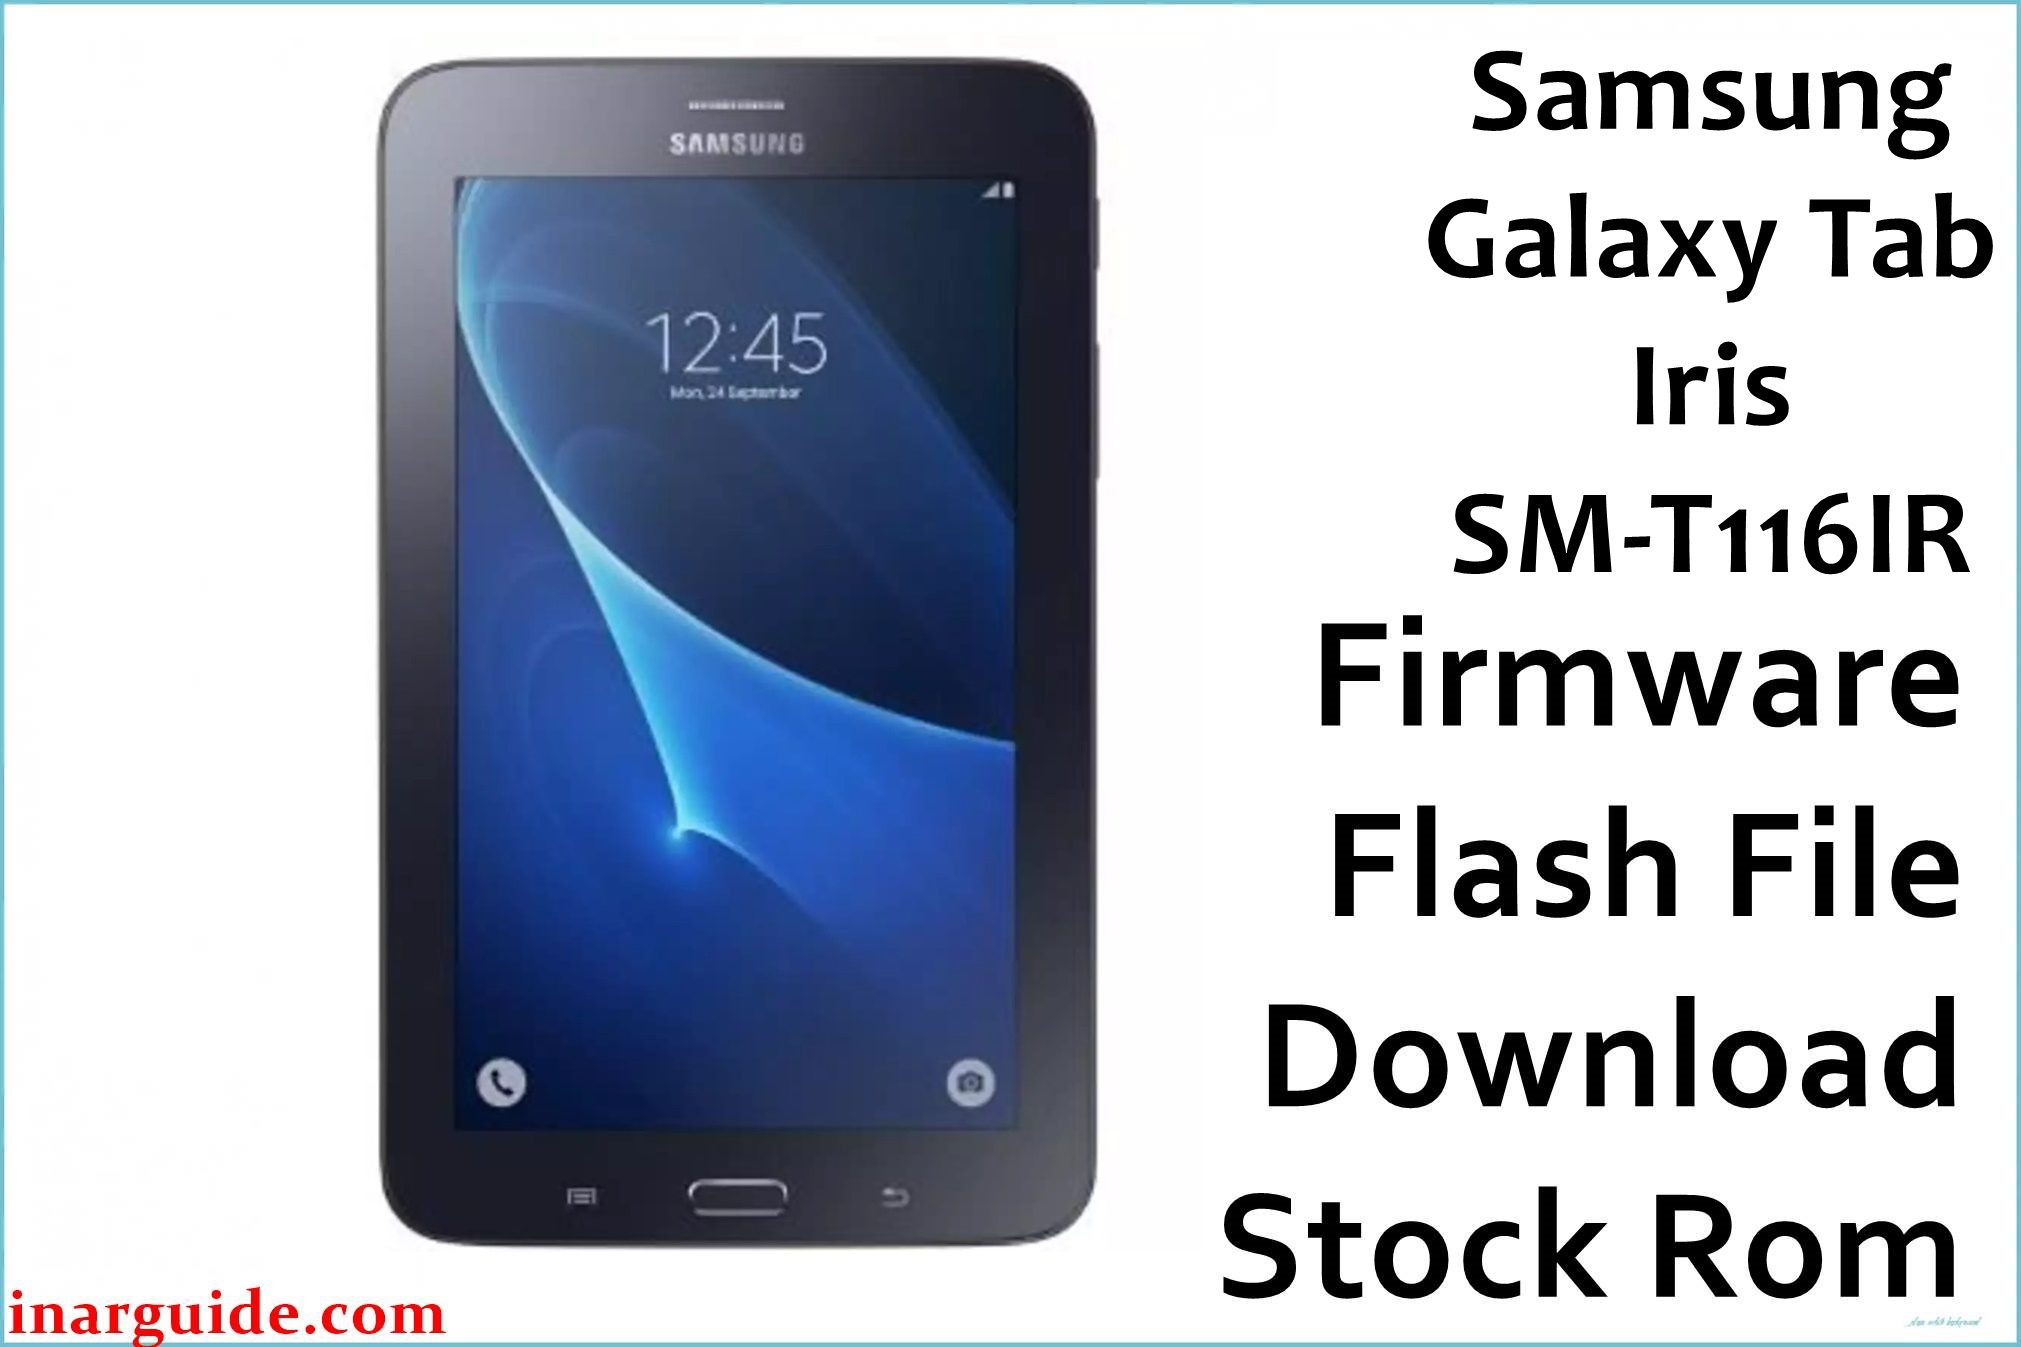 Samsung Galaxy Tab Iris SM T116IR